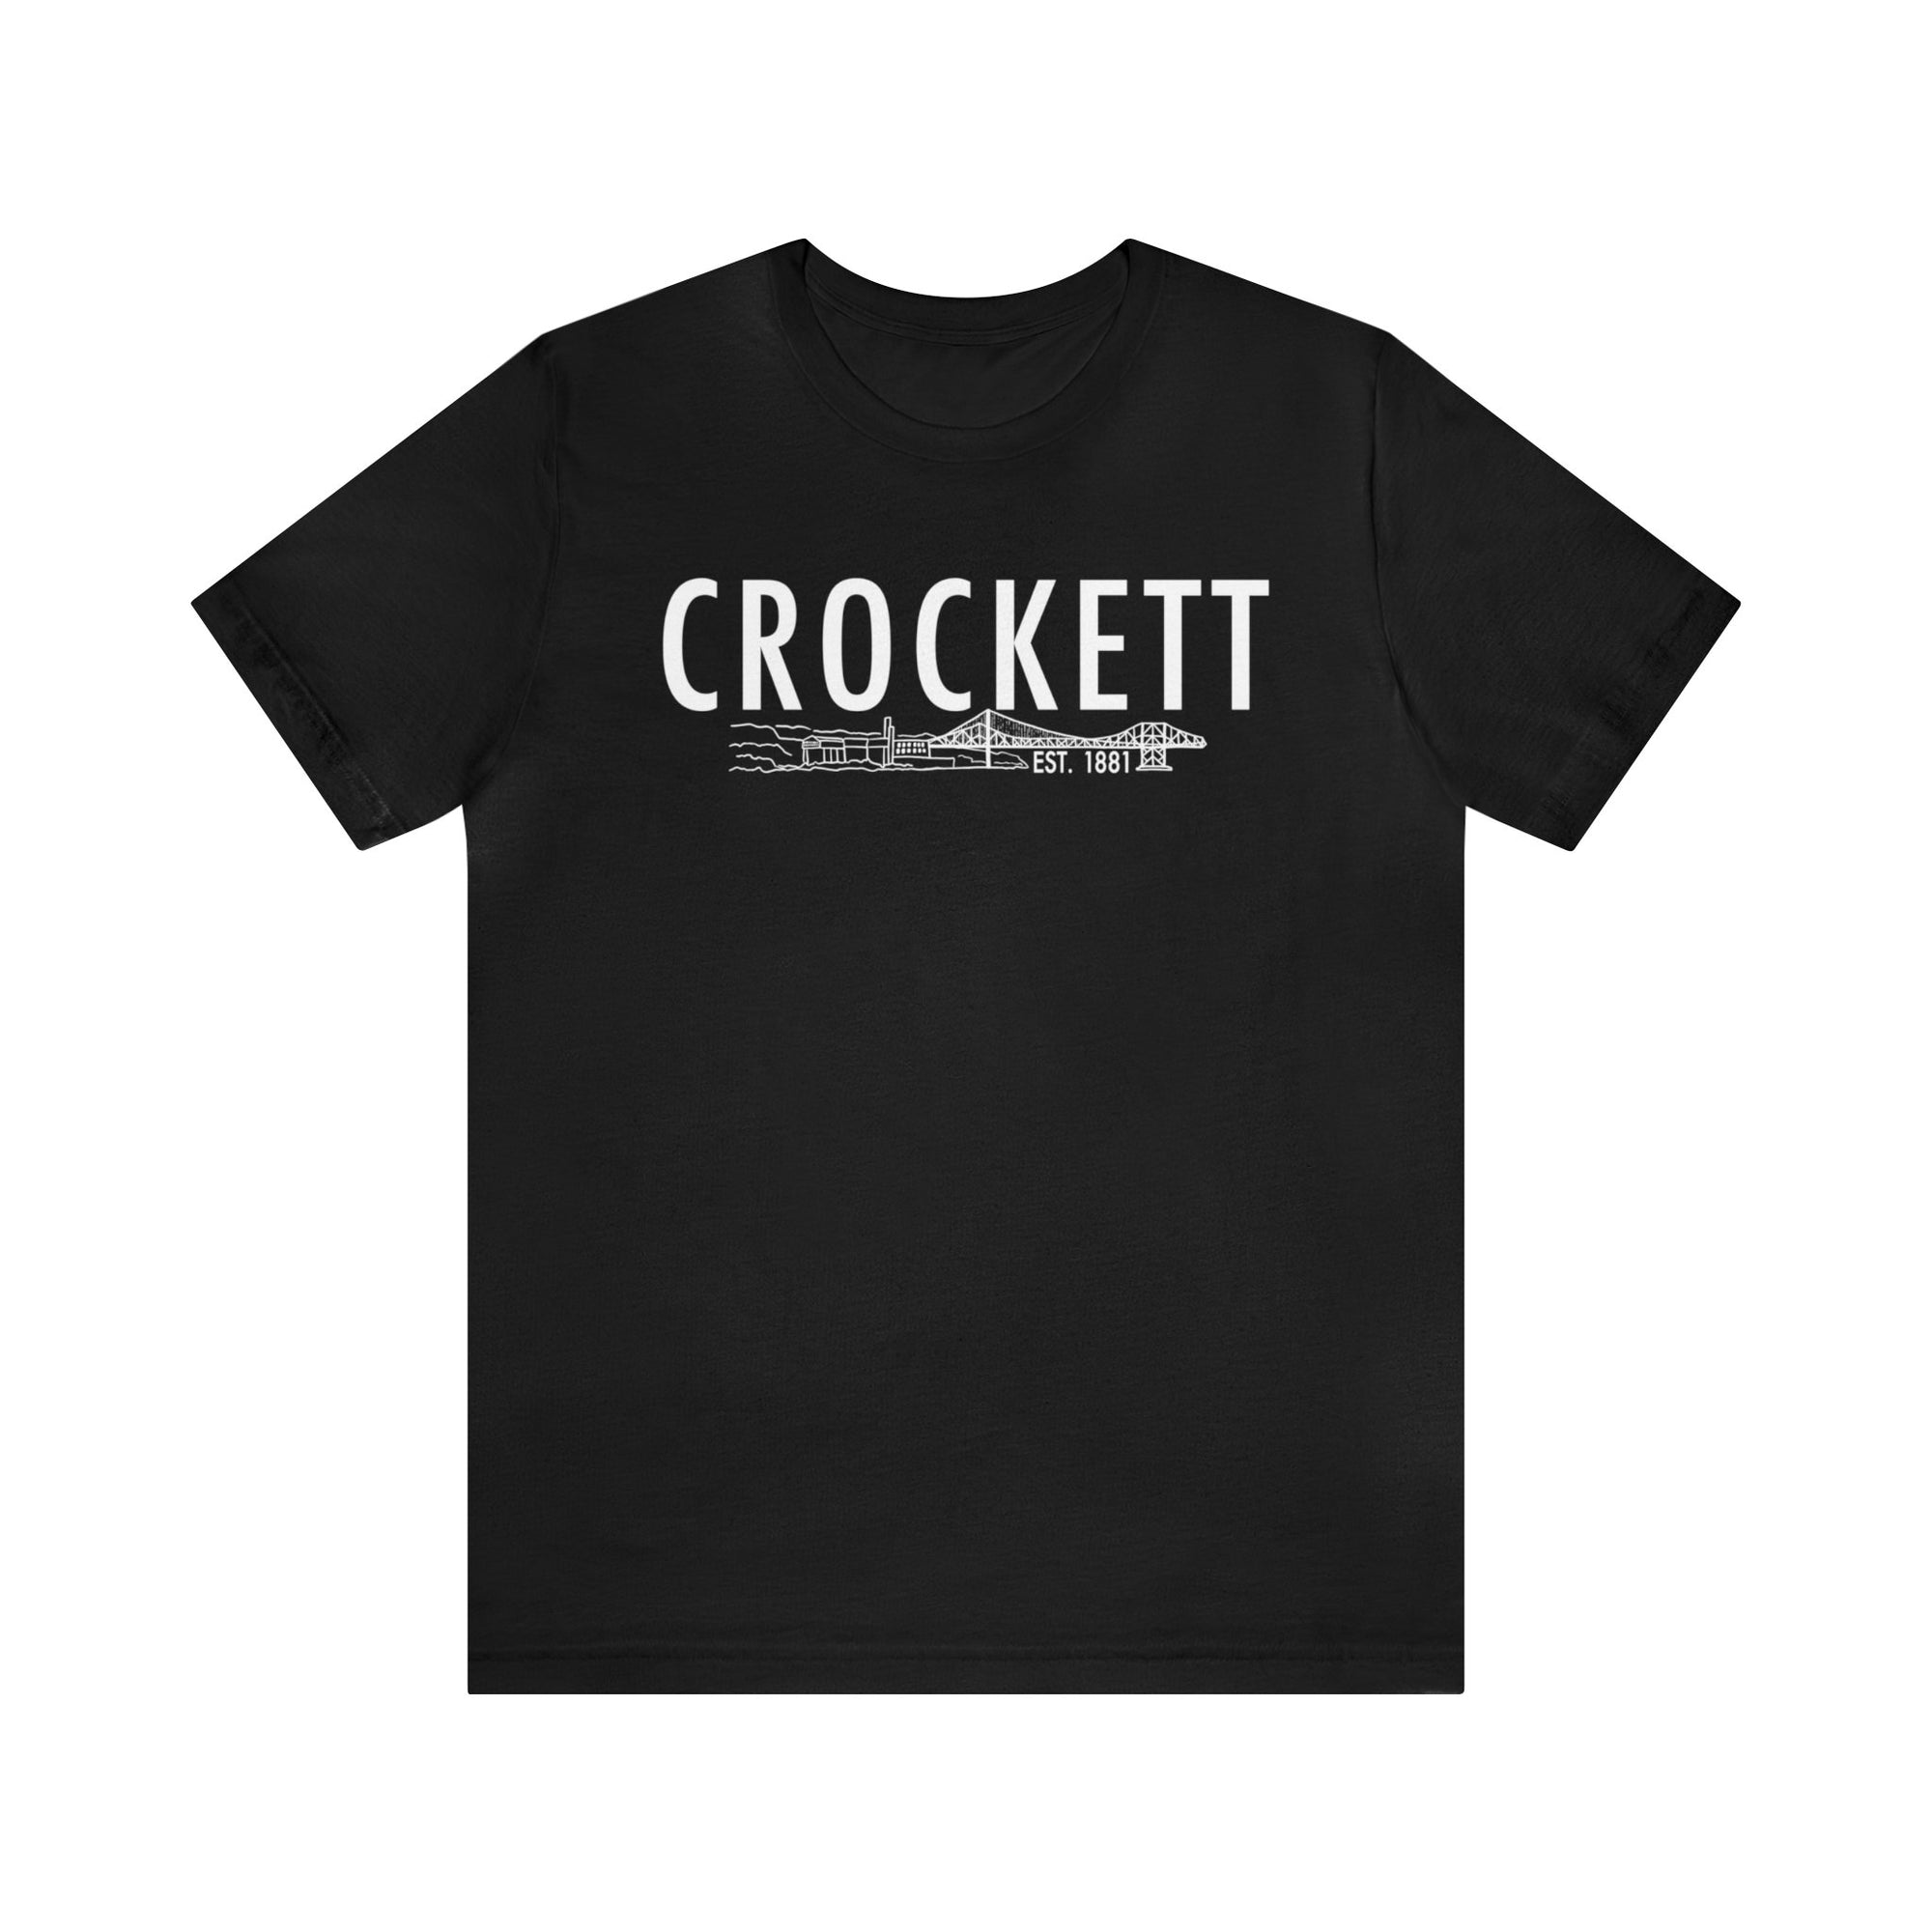 Crockett Est. 1881 W/ Bridge